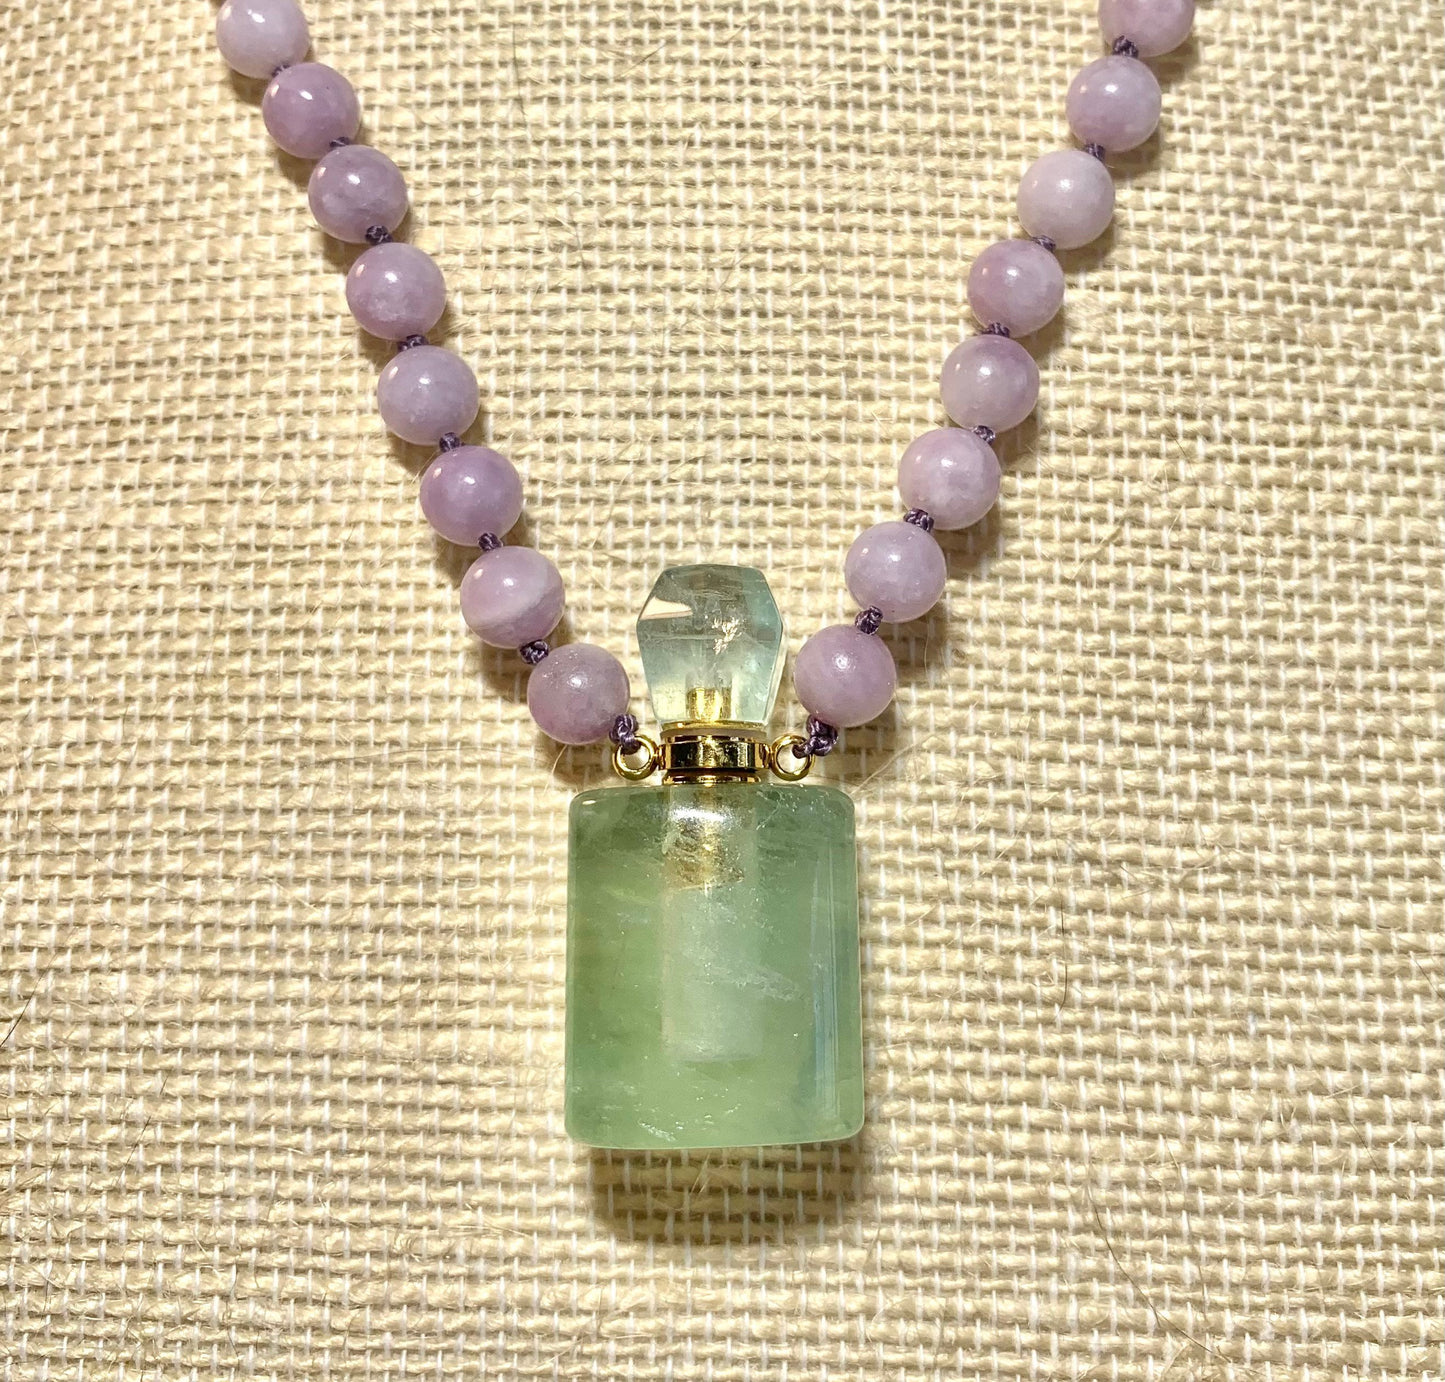 Mala Beads for Peace and Positivity, Lepidolite and Fluorite Miniature Perfume Bottle Pendant